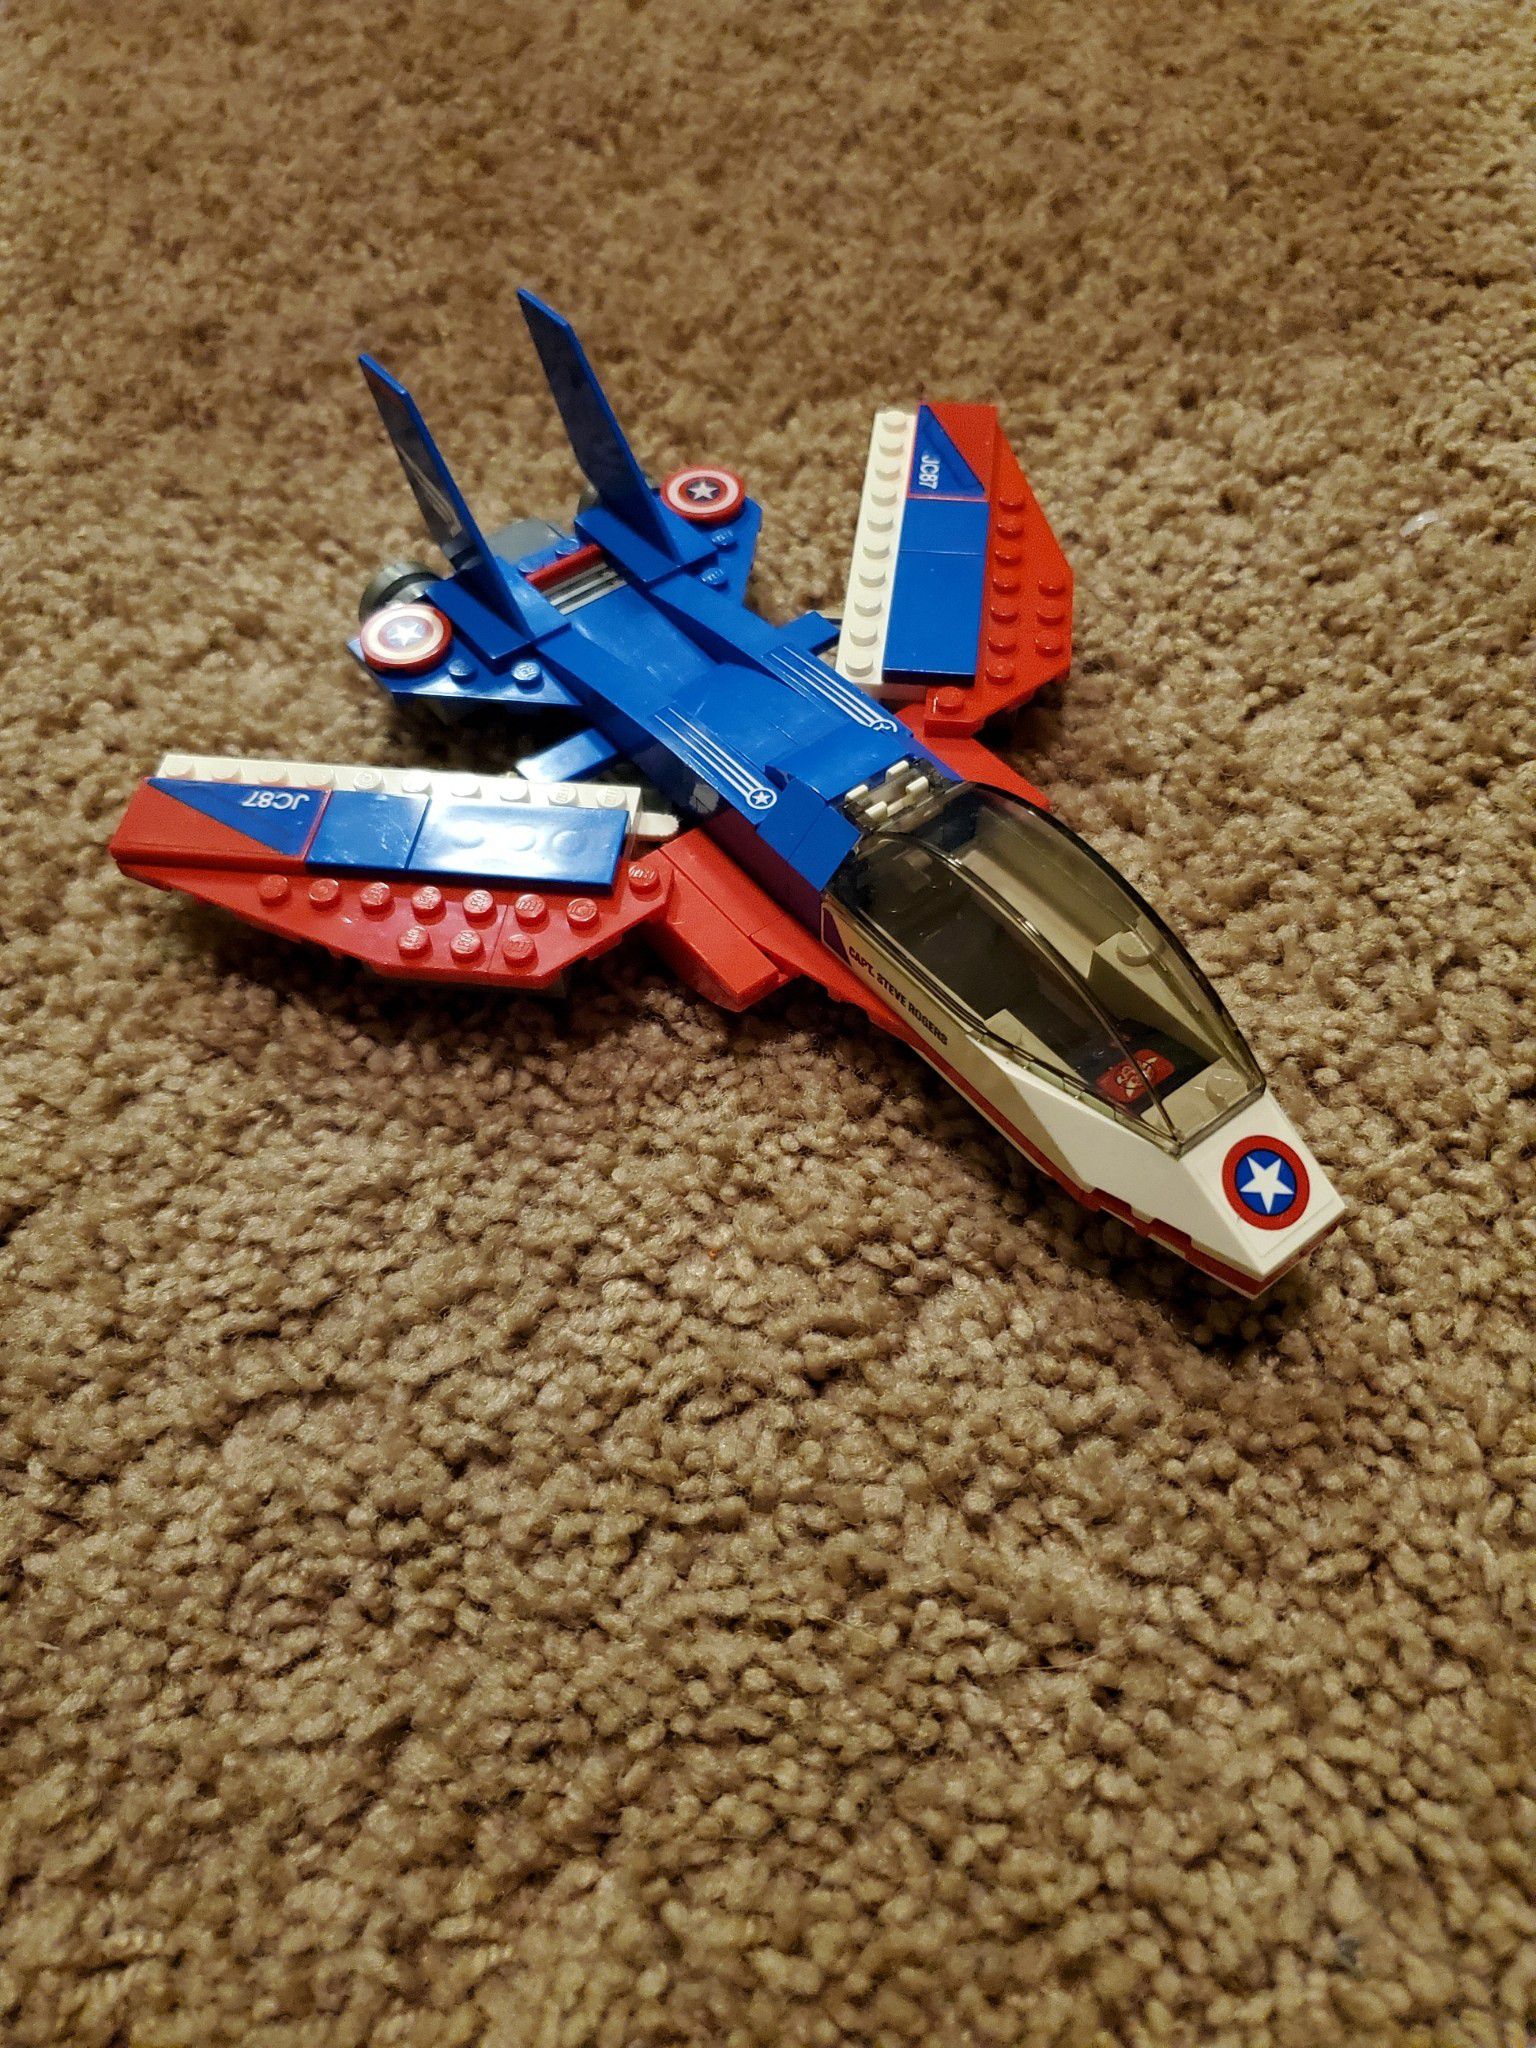 Lego marvel captain America jet